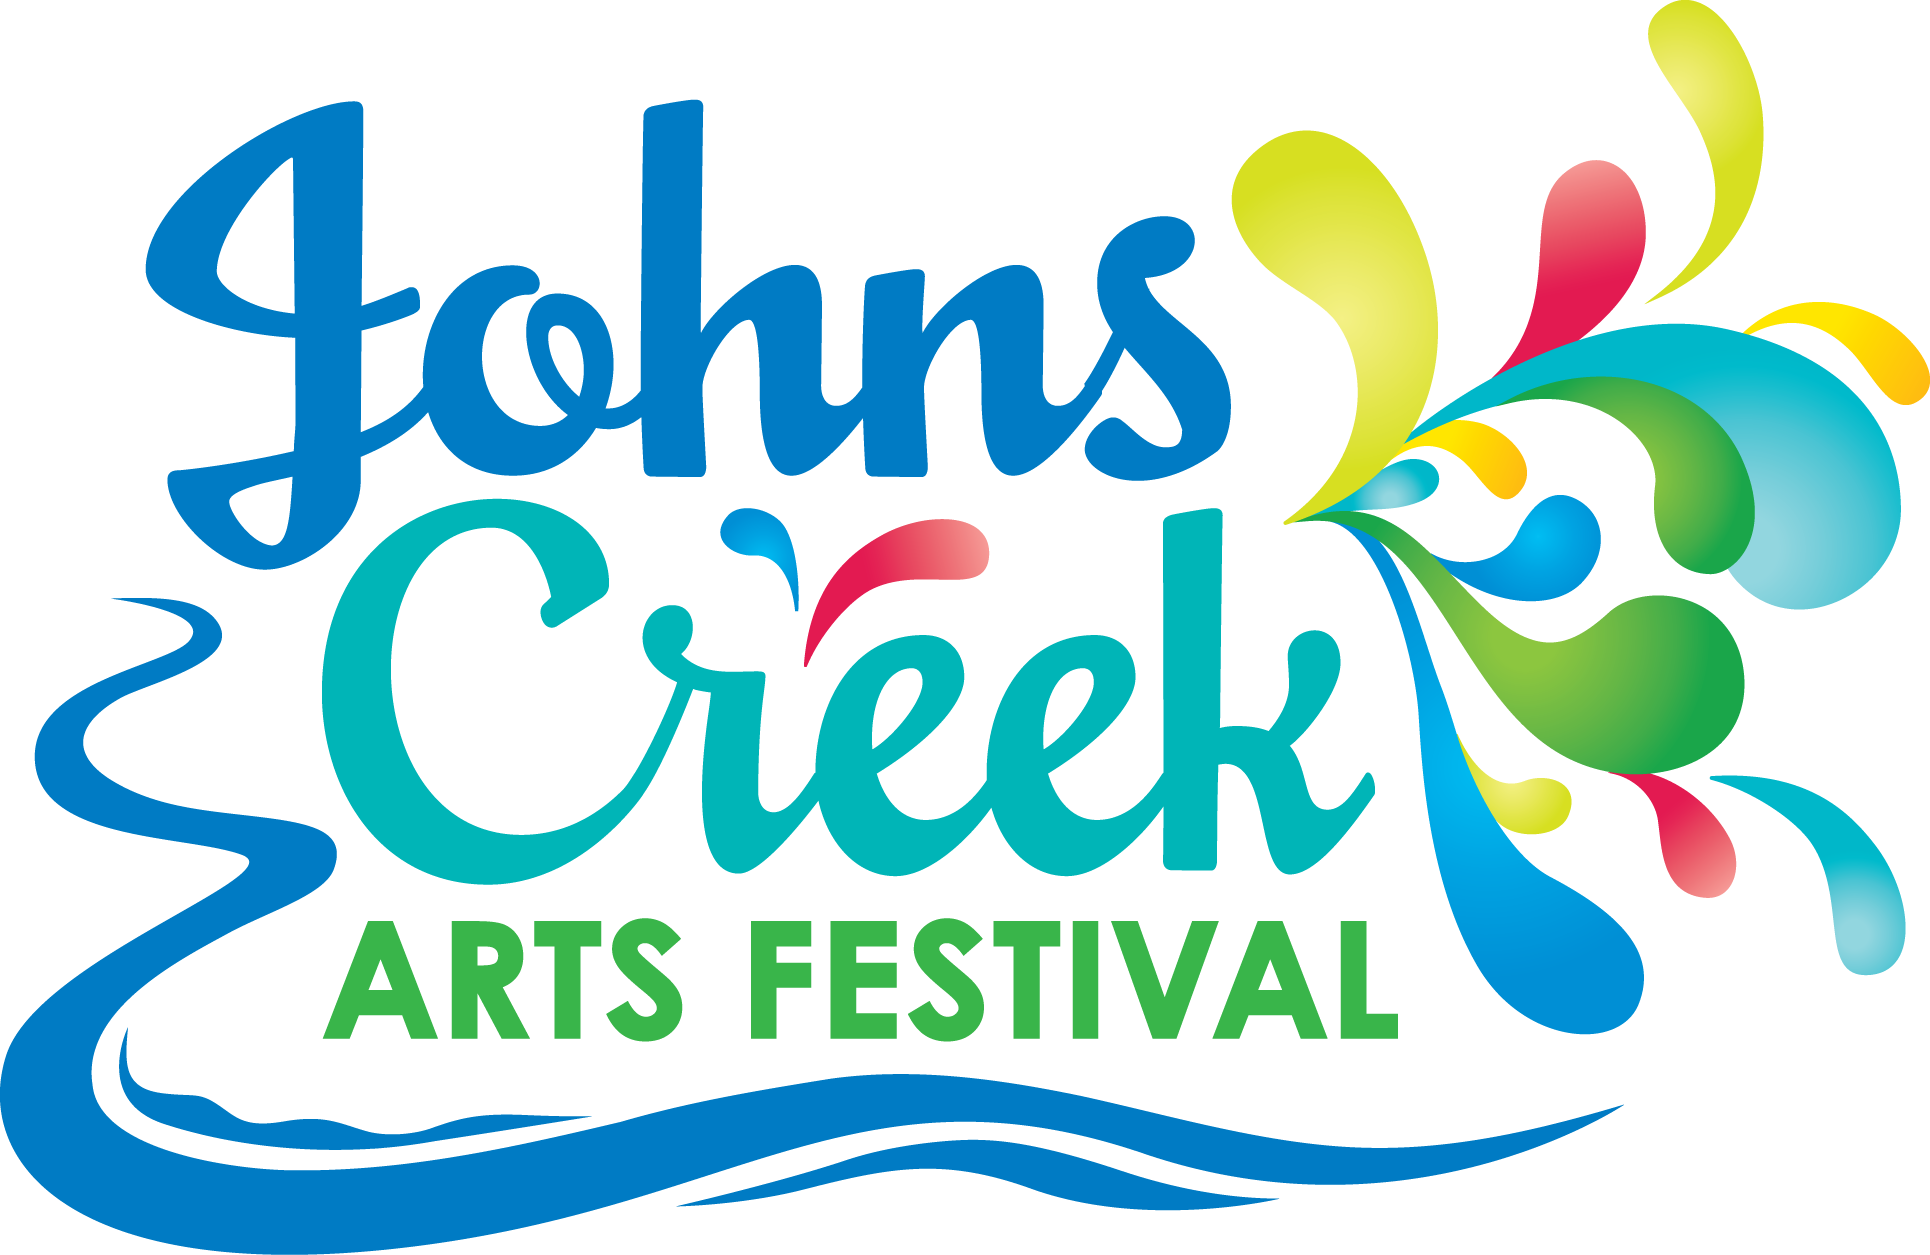 Johns Creek Arts Festival Splash Festivals